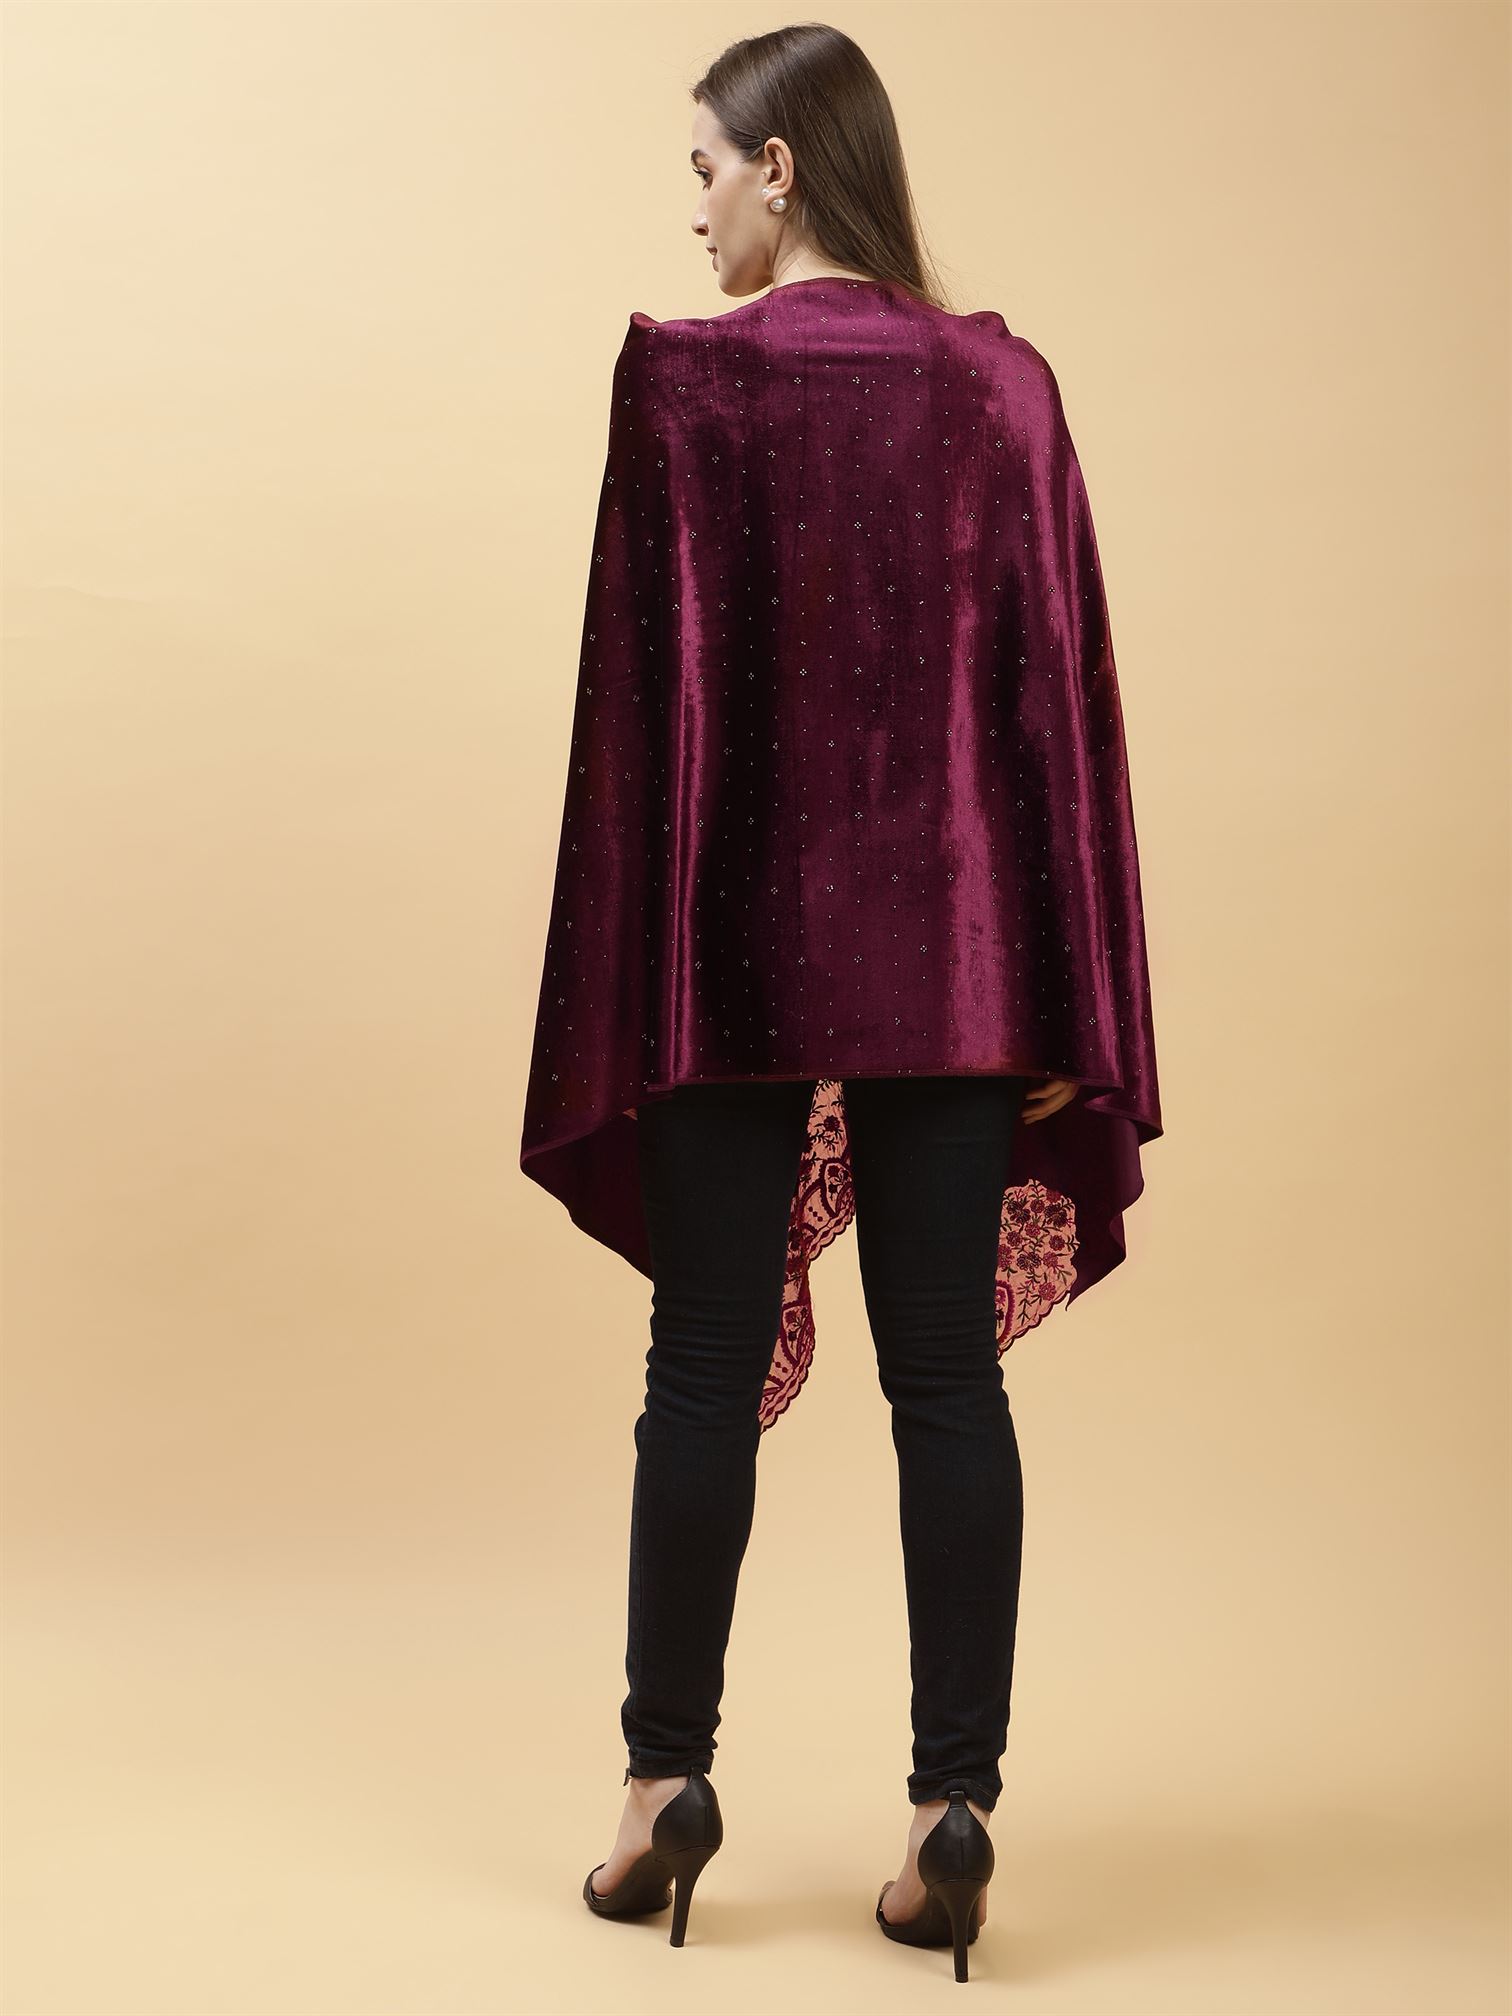 burgundy-embellished-velvet-stole-mchsvd1630w-moda-chales-5